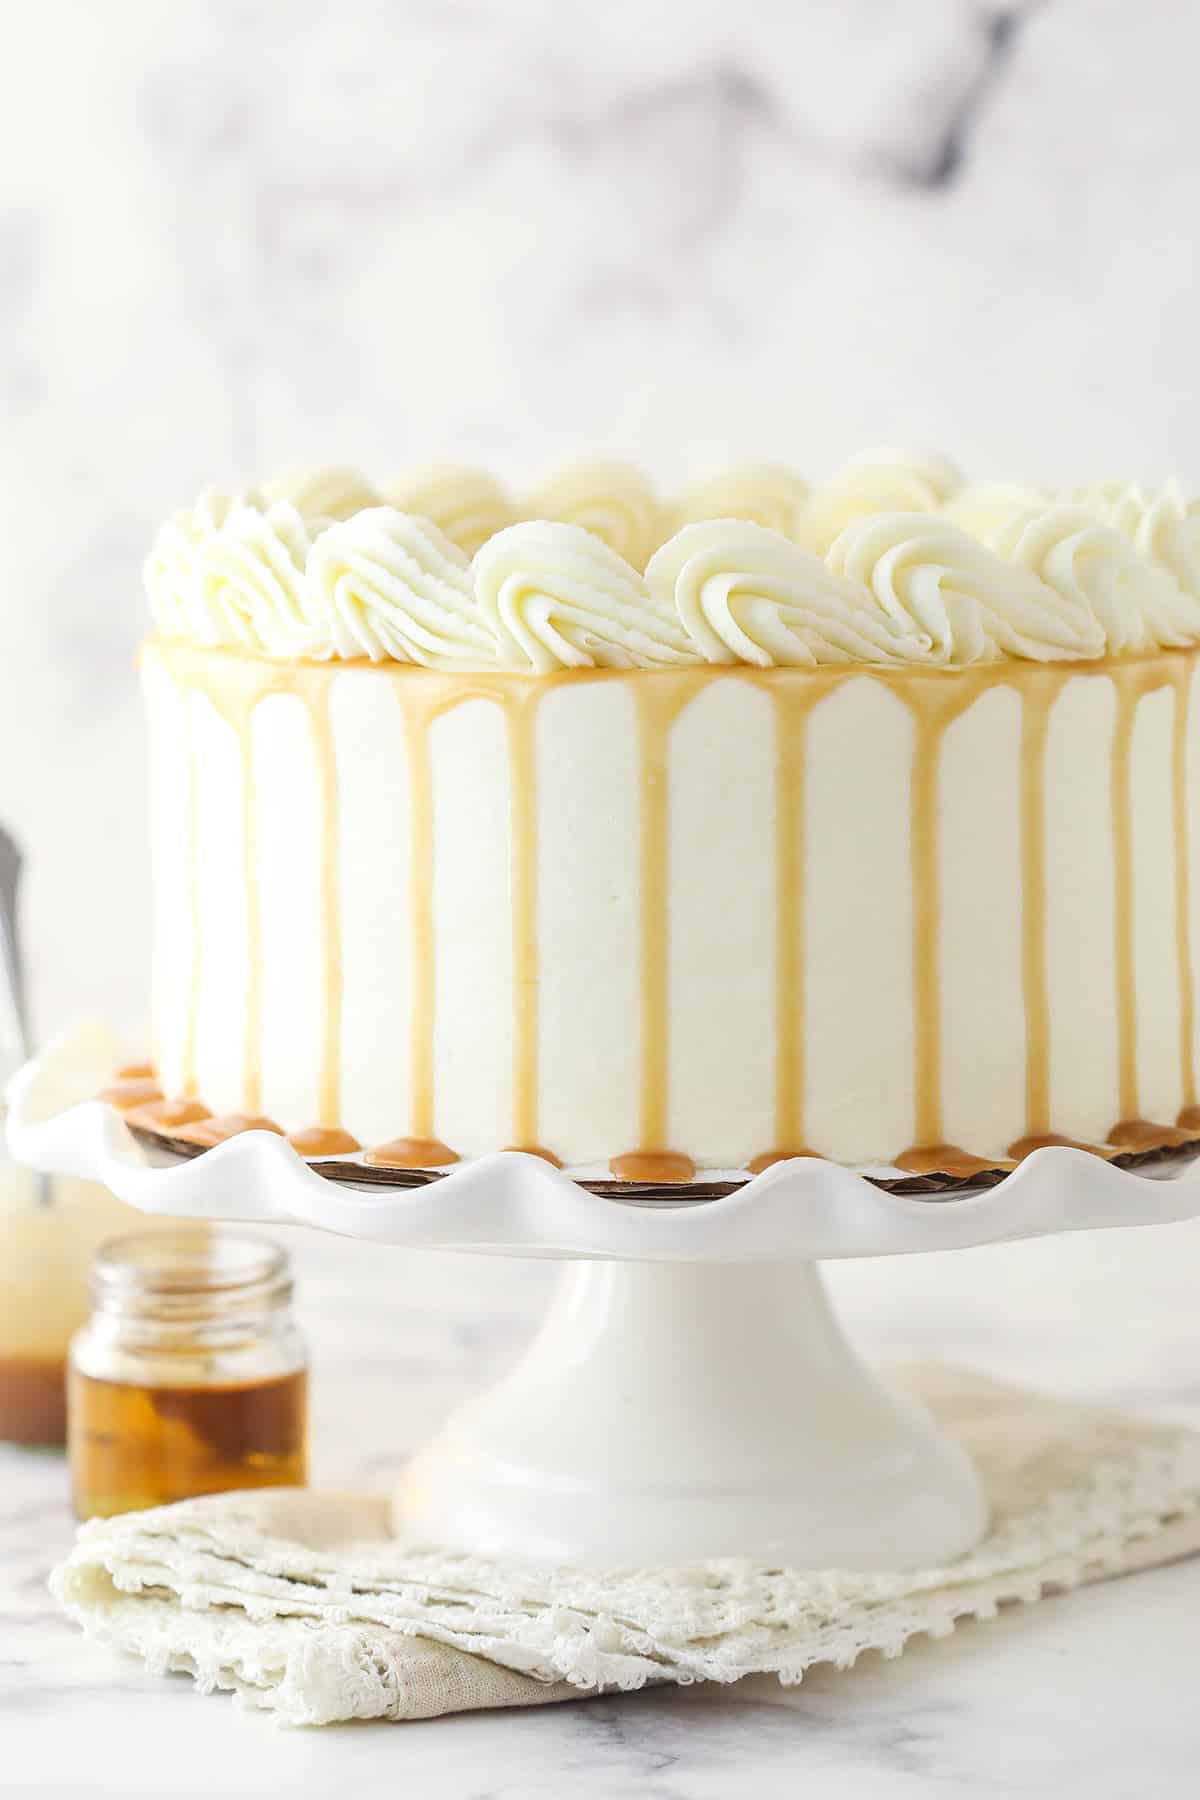 Vanilla bourbon cake on a cake stand.